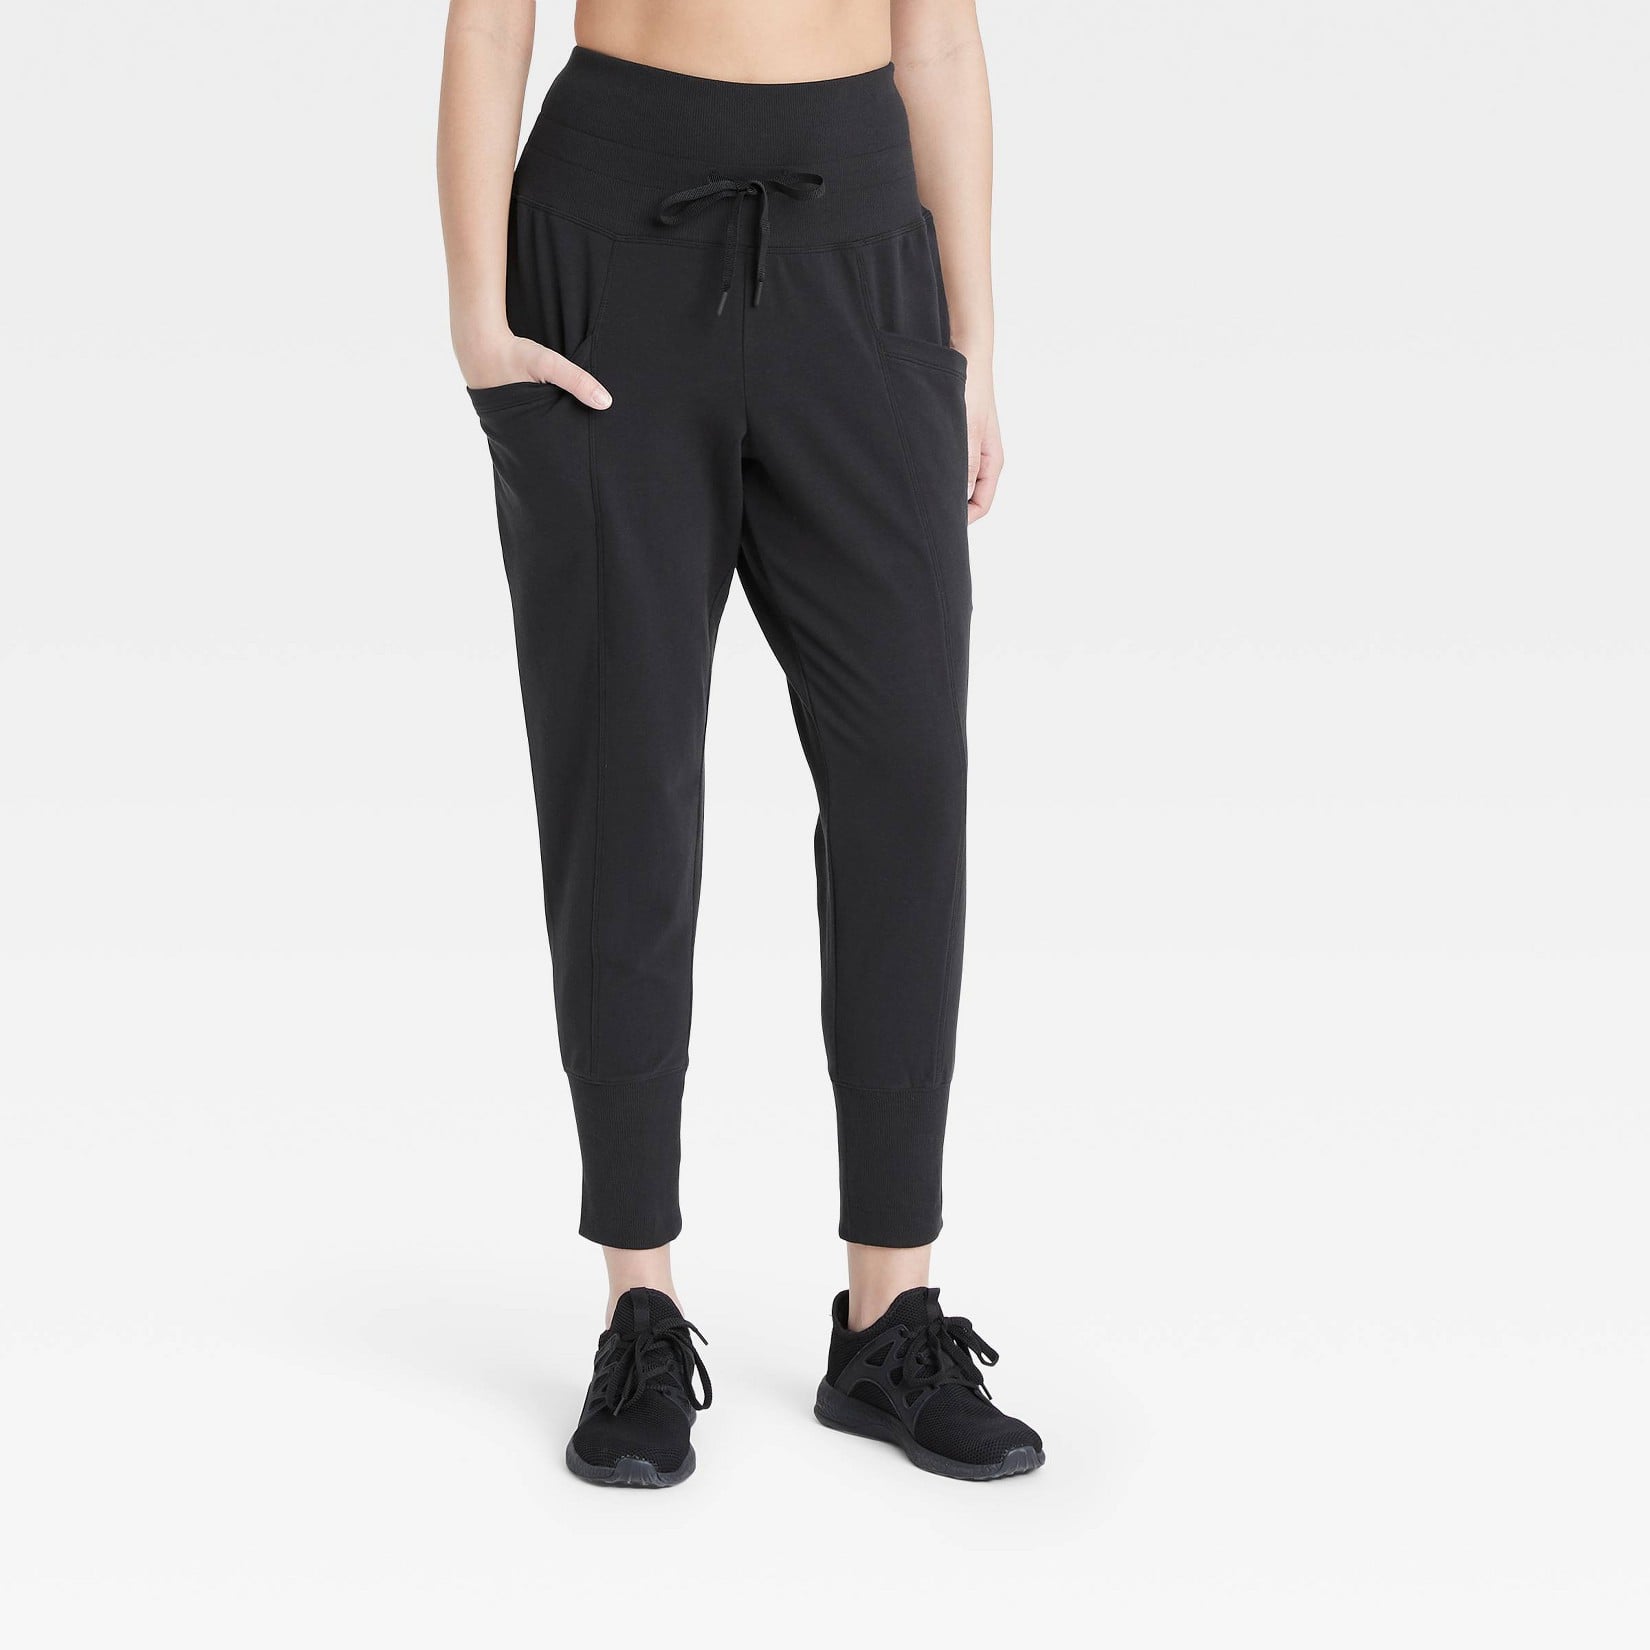 Black : Workout Pants for Women : Target